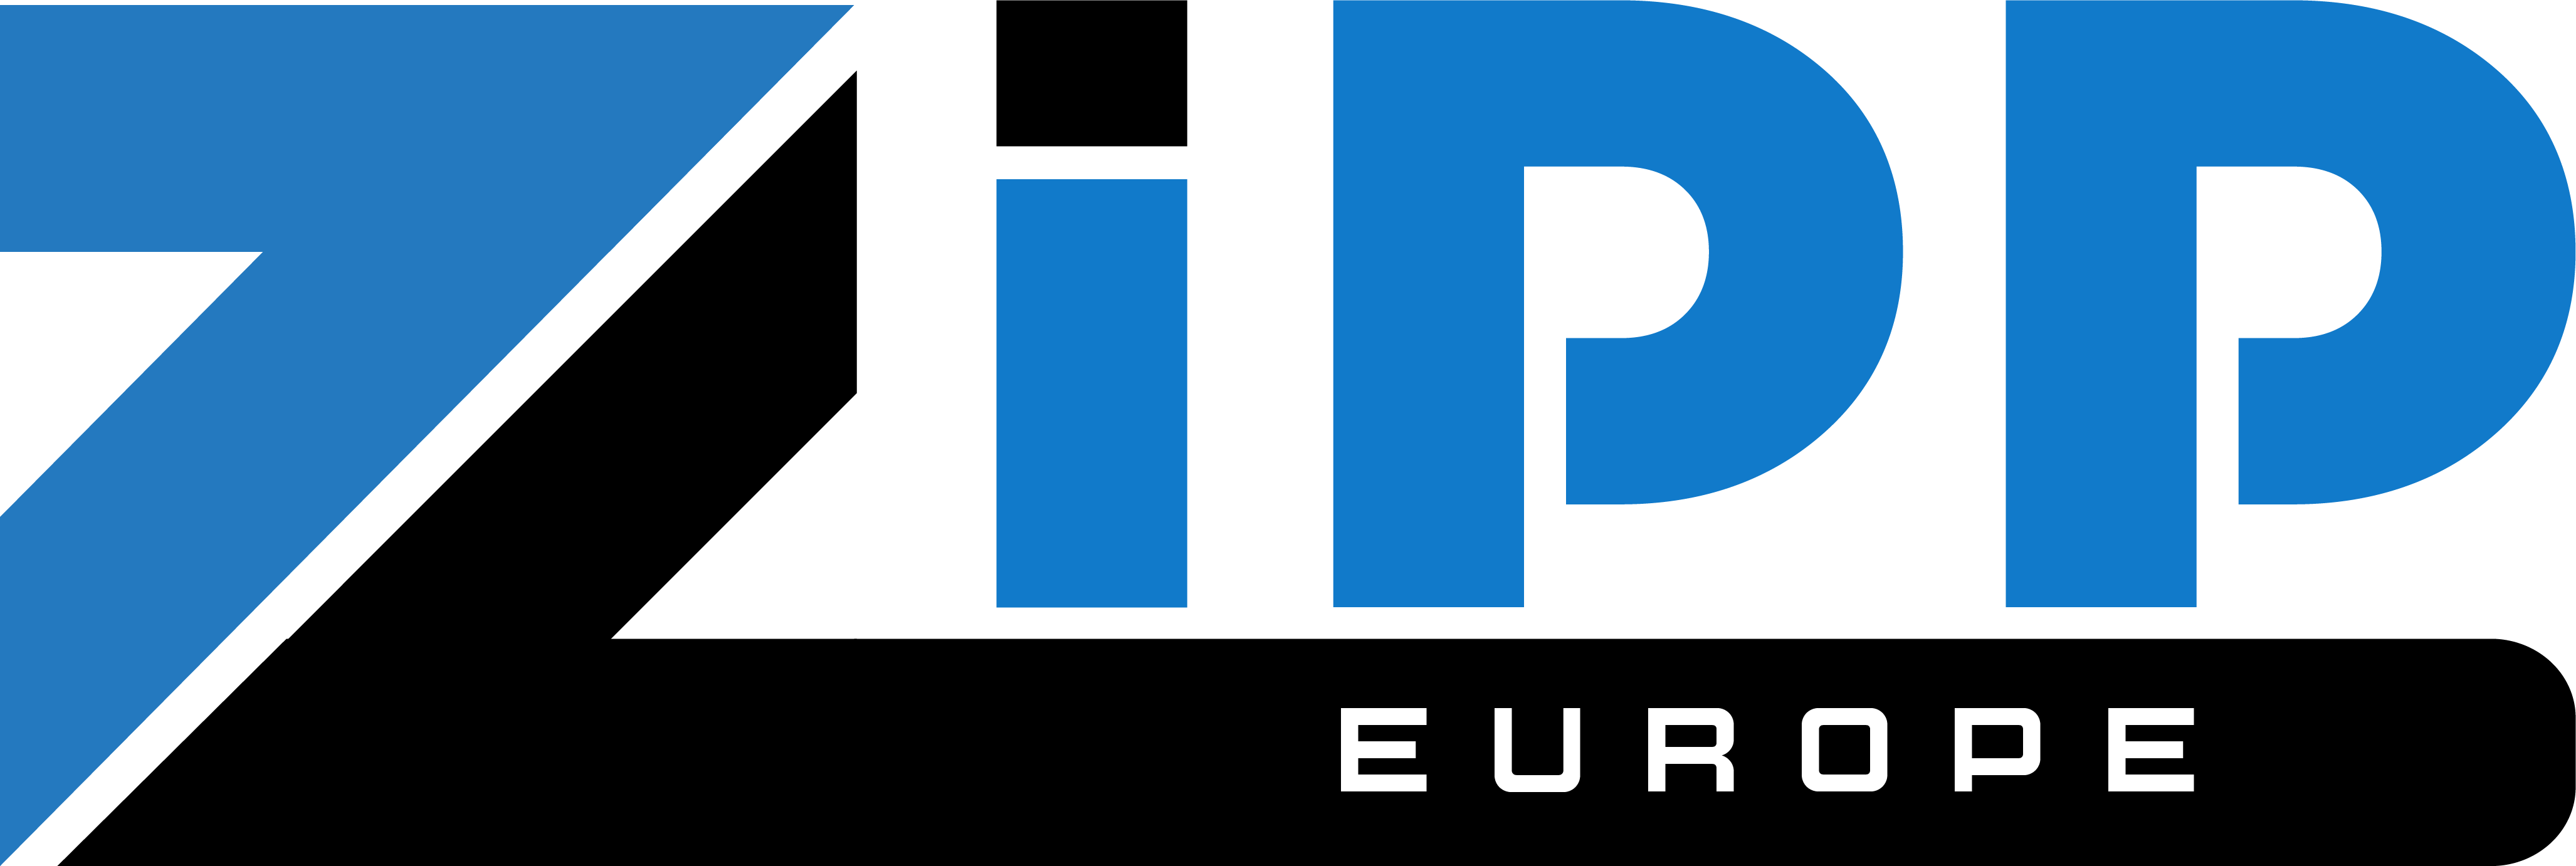 logo-zipp